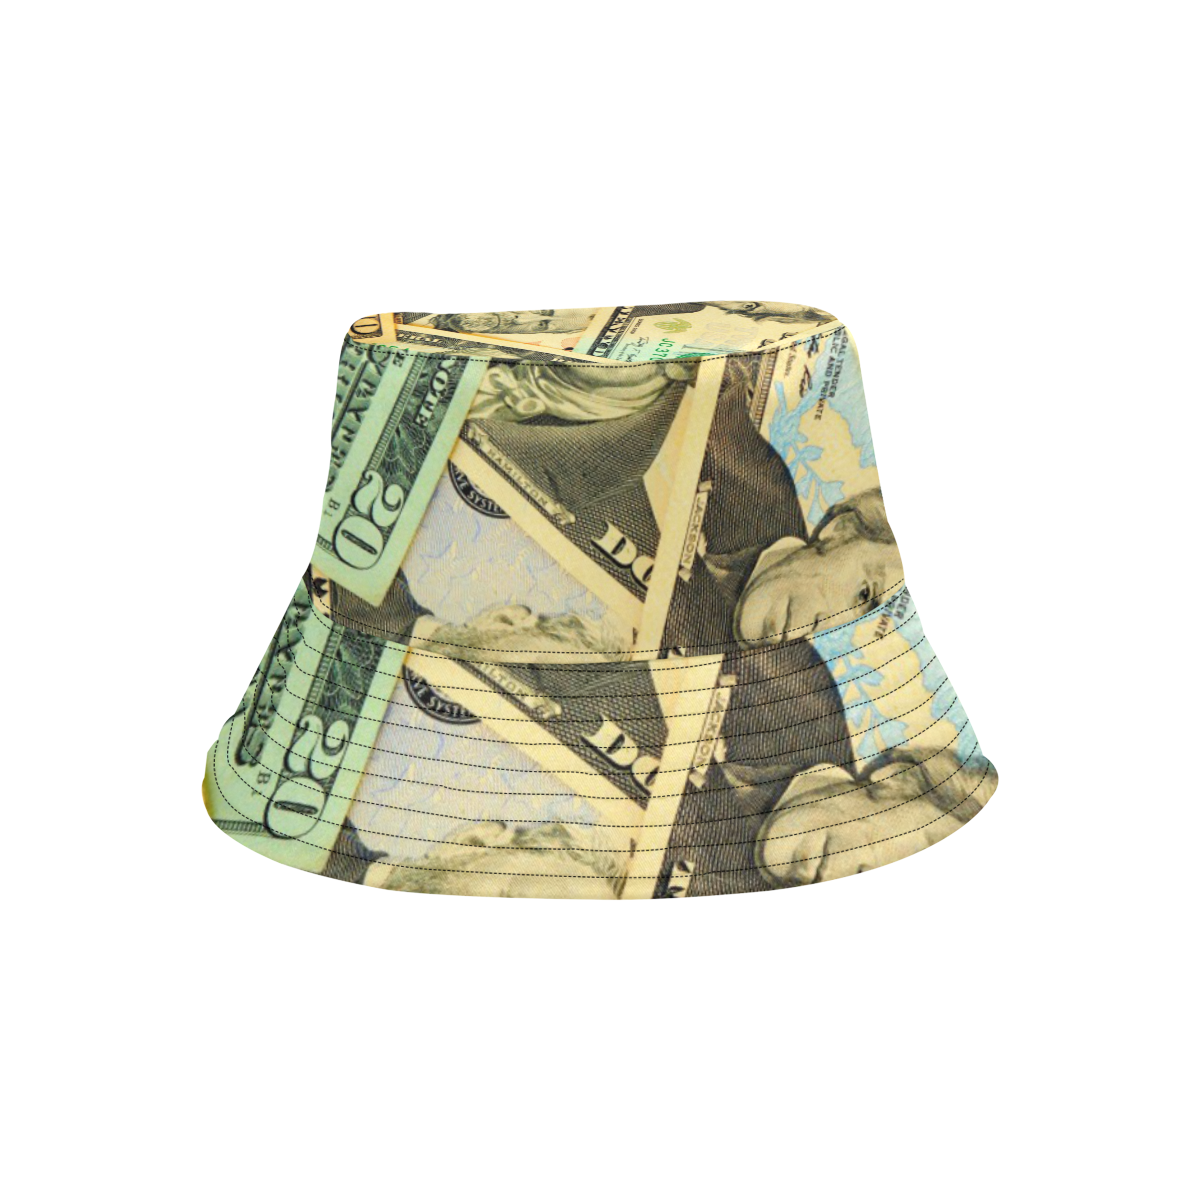 US DOLLARS All Over Print Bucket Hat